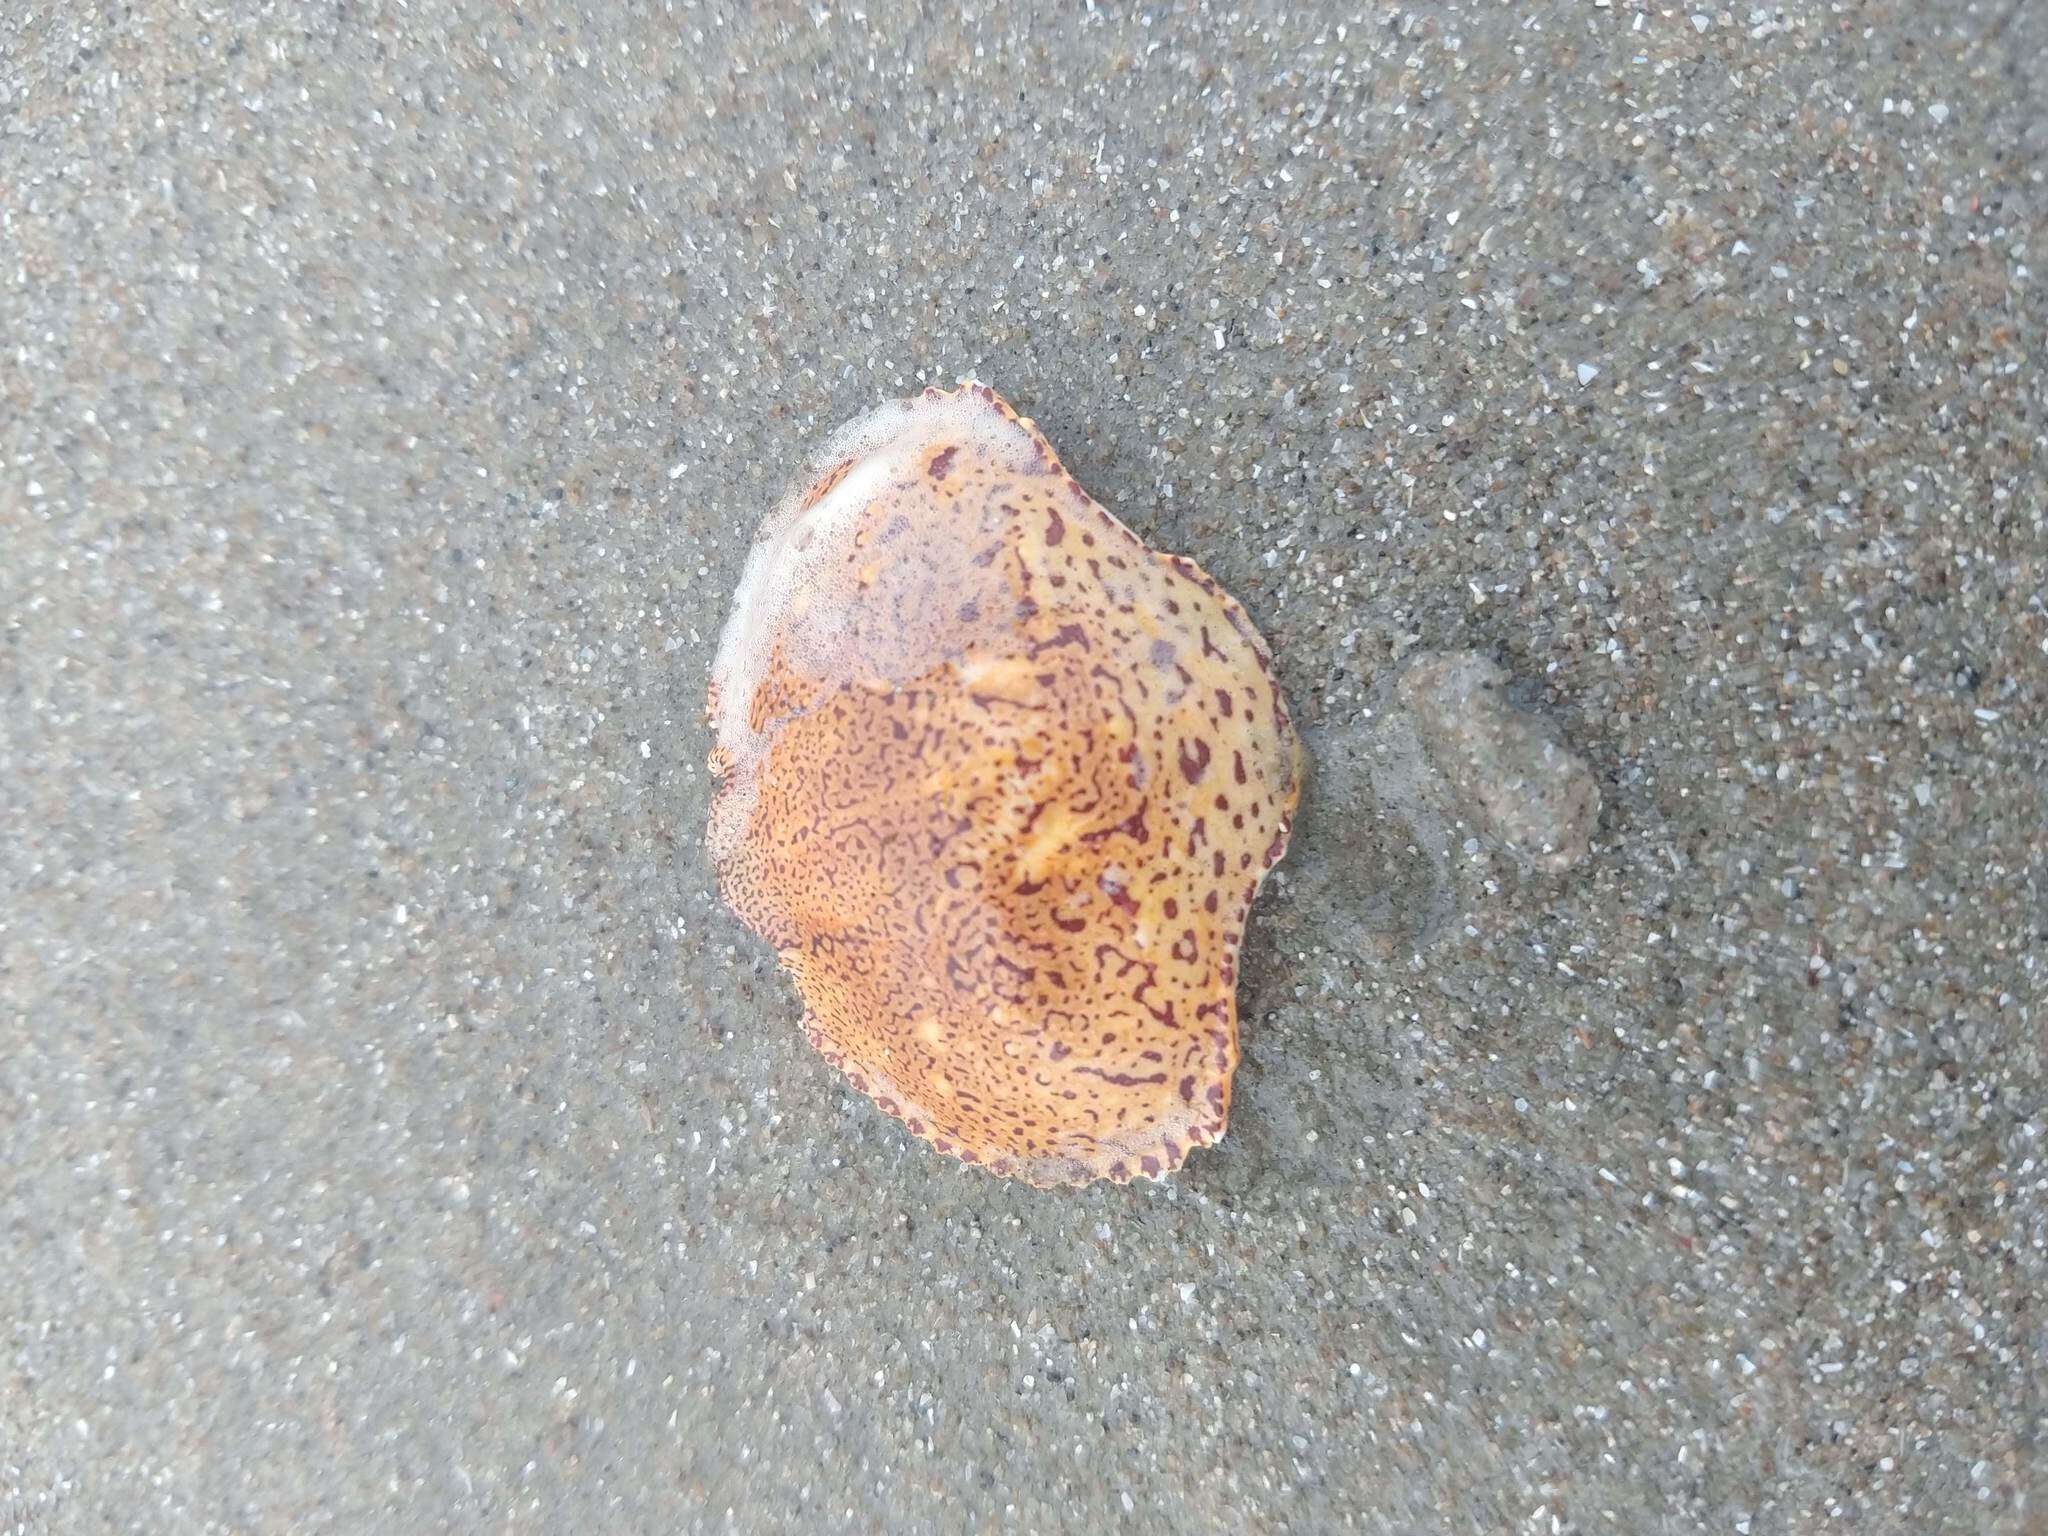 Image of flecked box crab